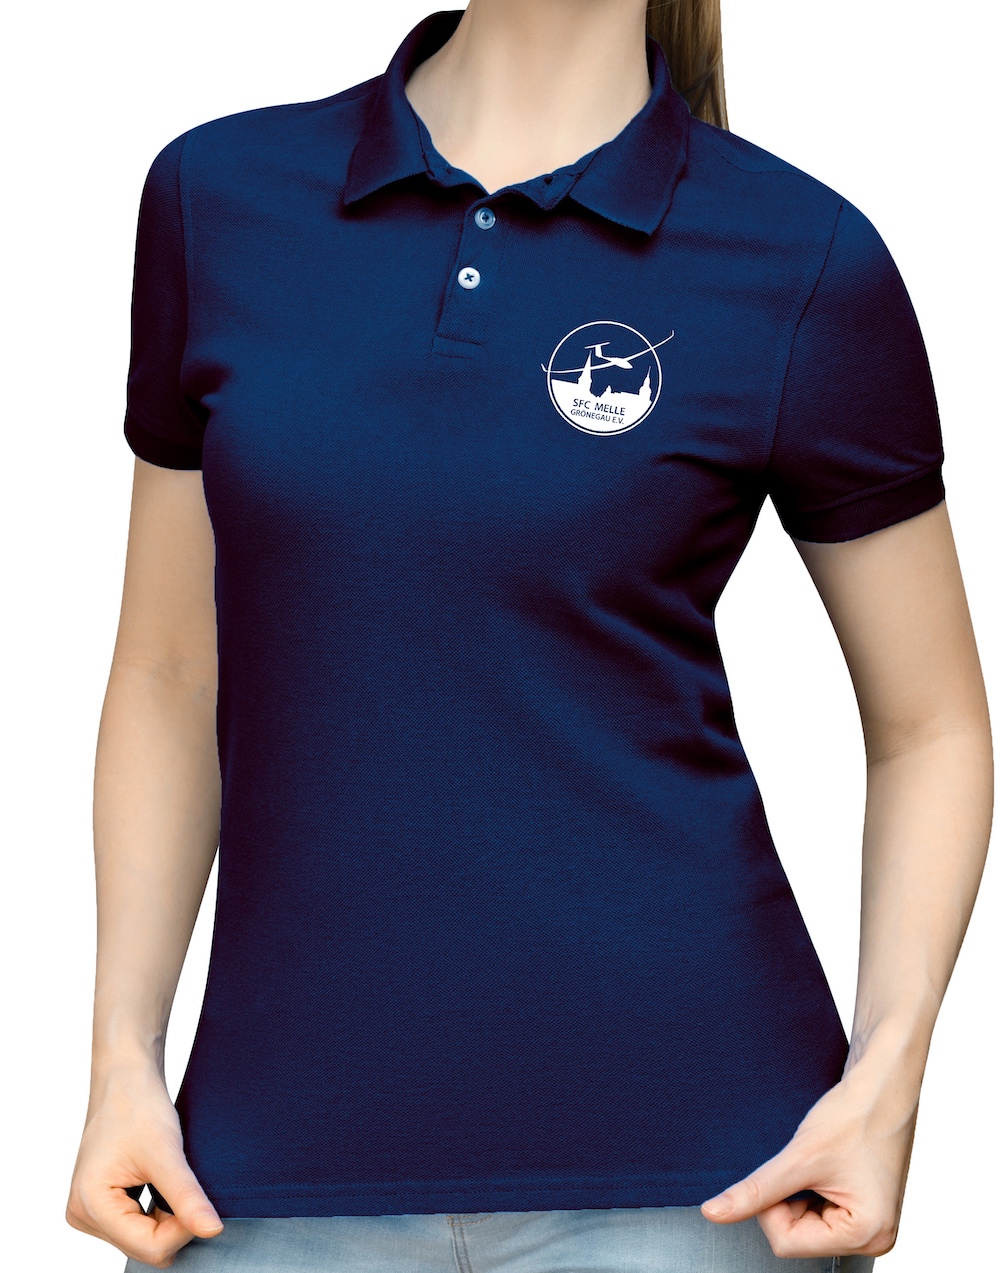 Damen BASIC-Polo-Shirt SFC Melle Grönegau e.V.